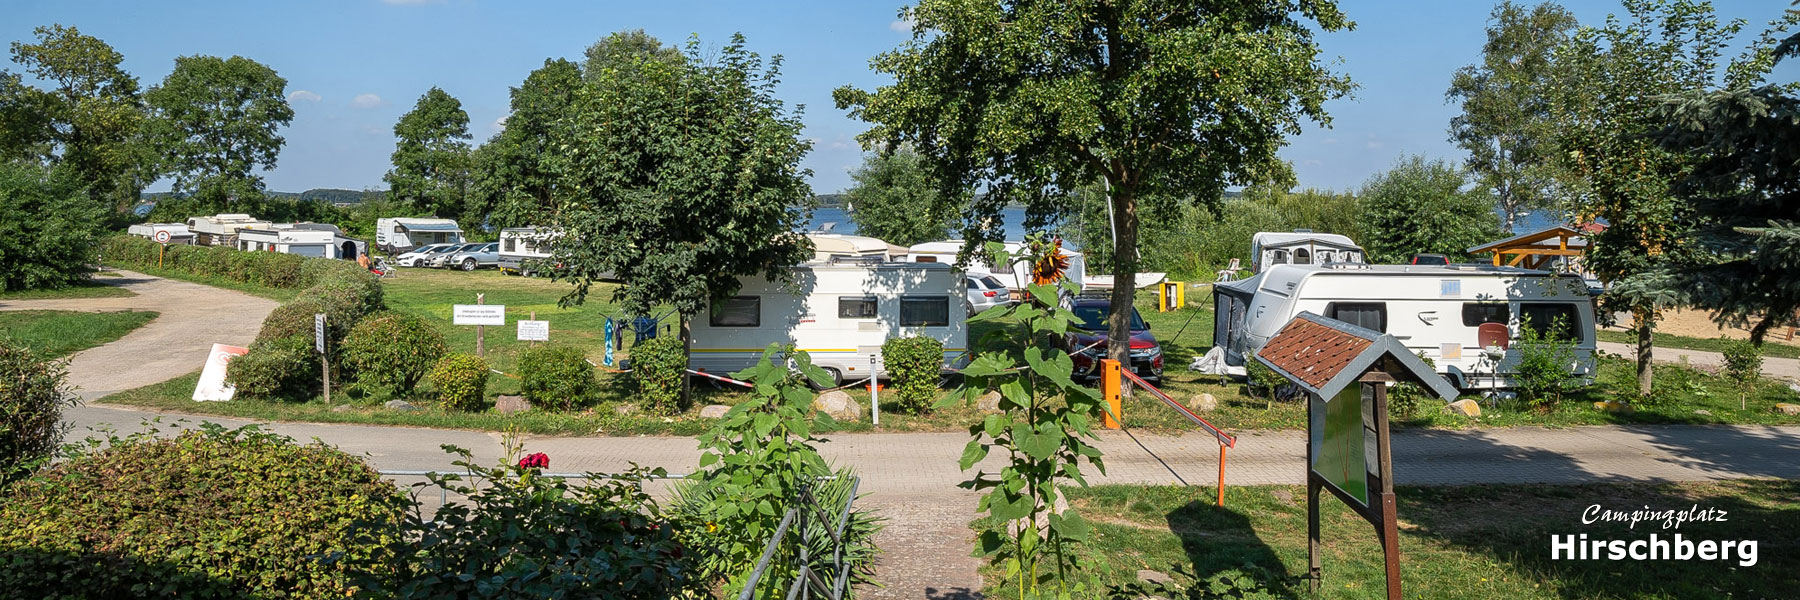 Hirschberg-Camping - Müritz-Camp GmbH Gotthun